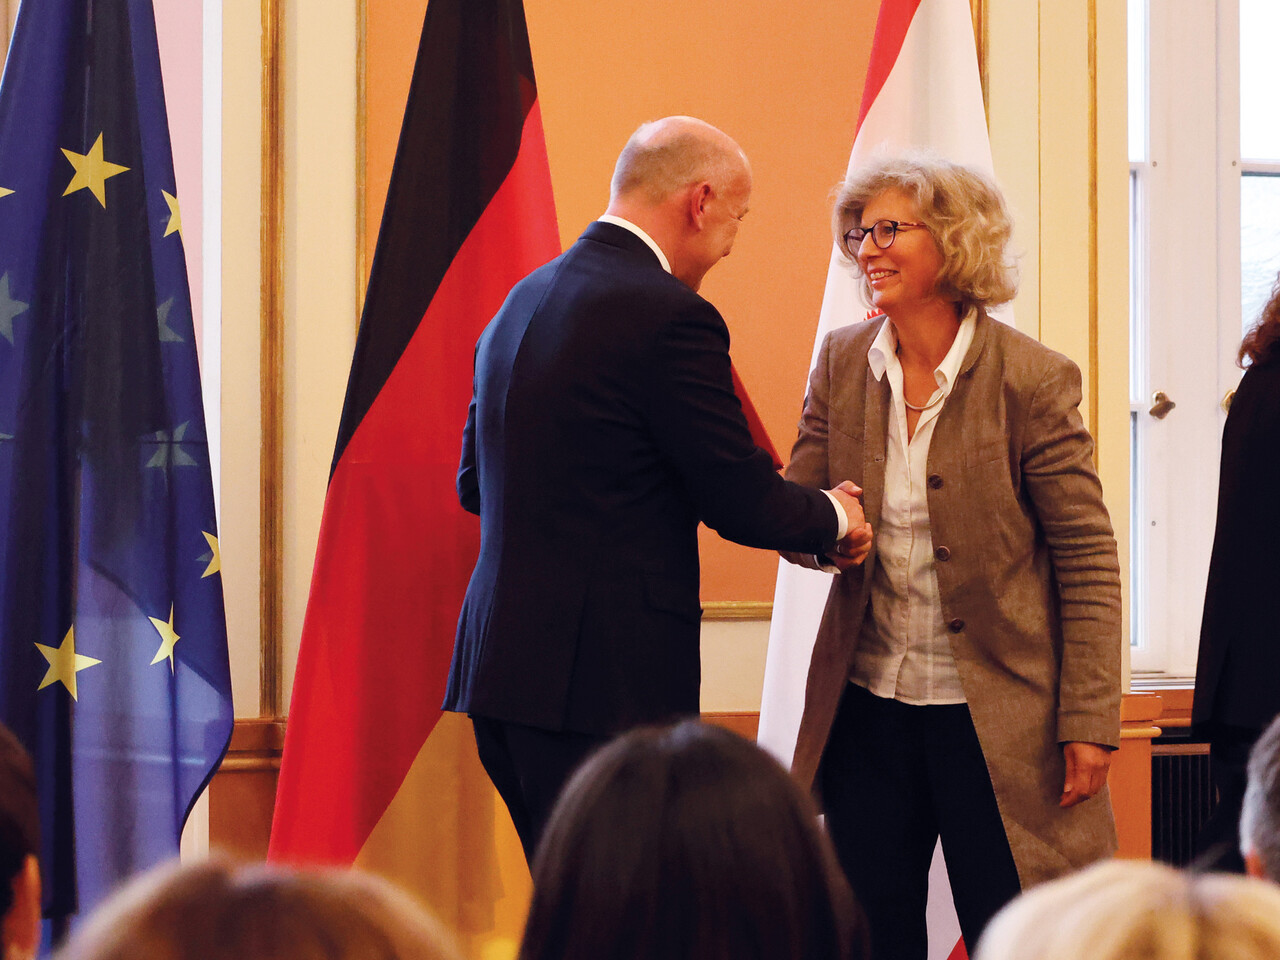 The Governing Mayor of Berlin, Kai Wegner, presents Alexandra Knauer with the Order of Merit